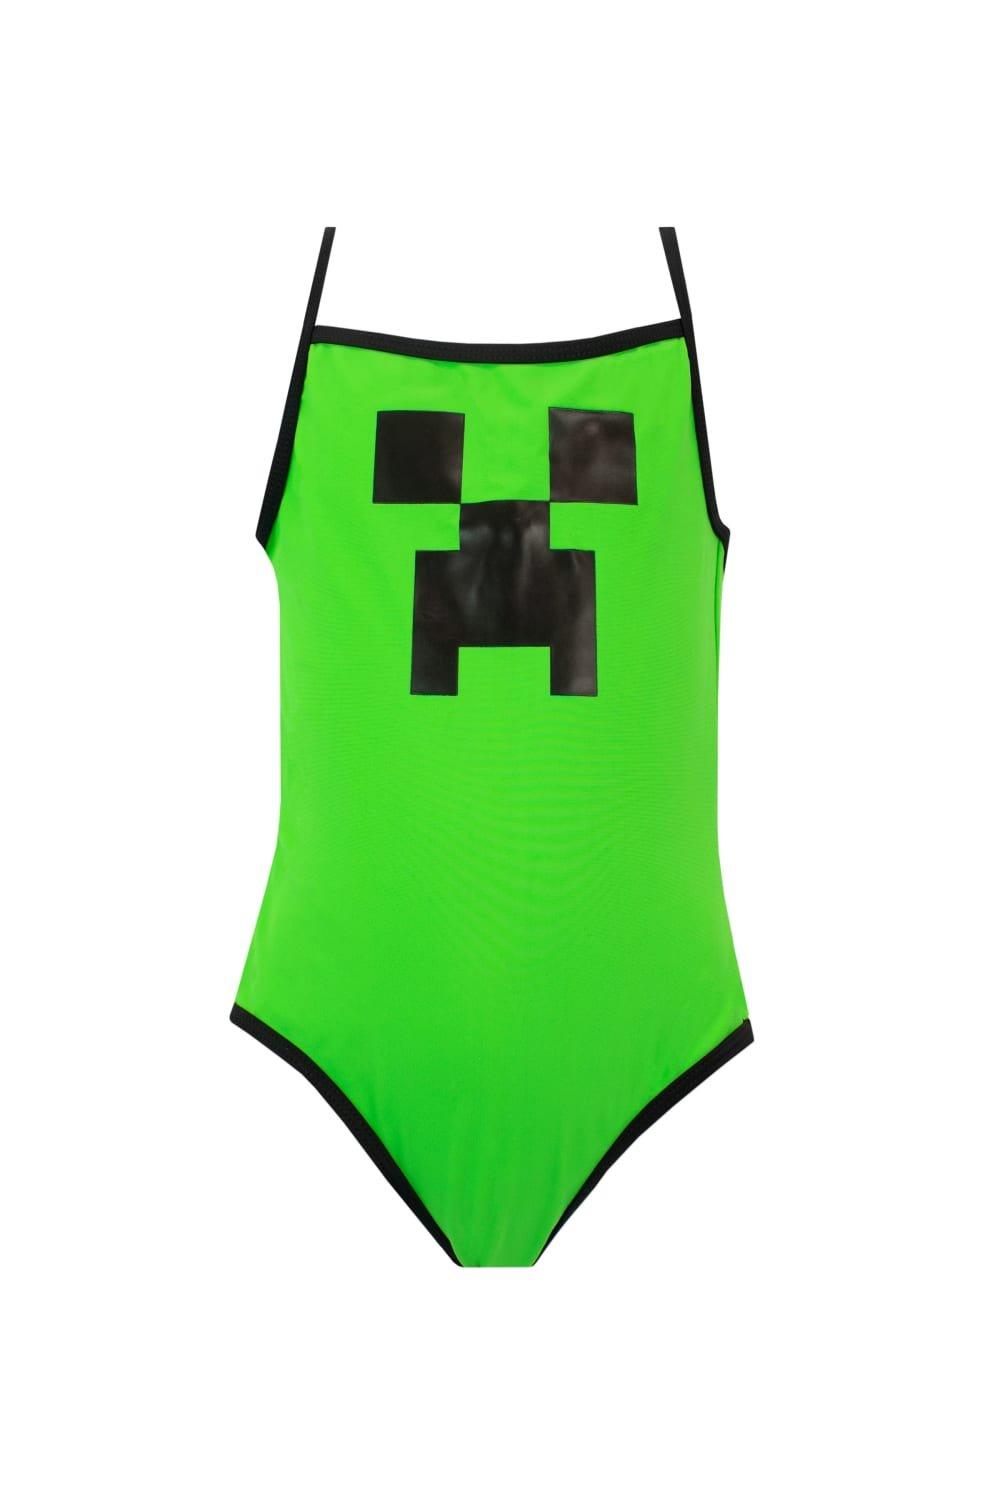 Creeper Gaming Swimsuit